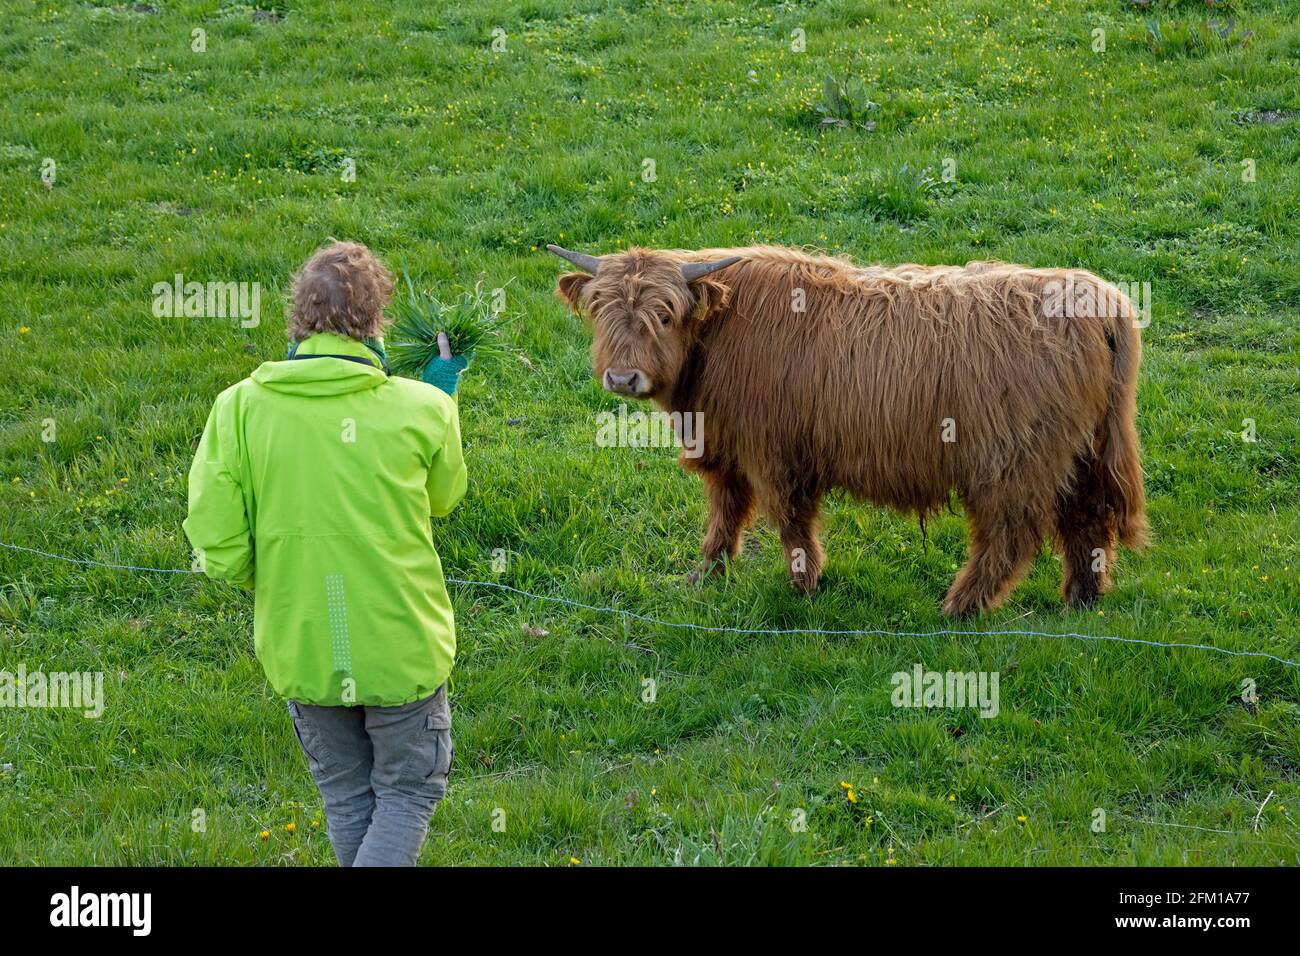 woman alluring Highland cattle with grass, Goldhöft, Gelting Bay, Schleswig-Holstein, Germany Stock Photo